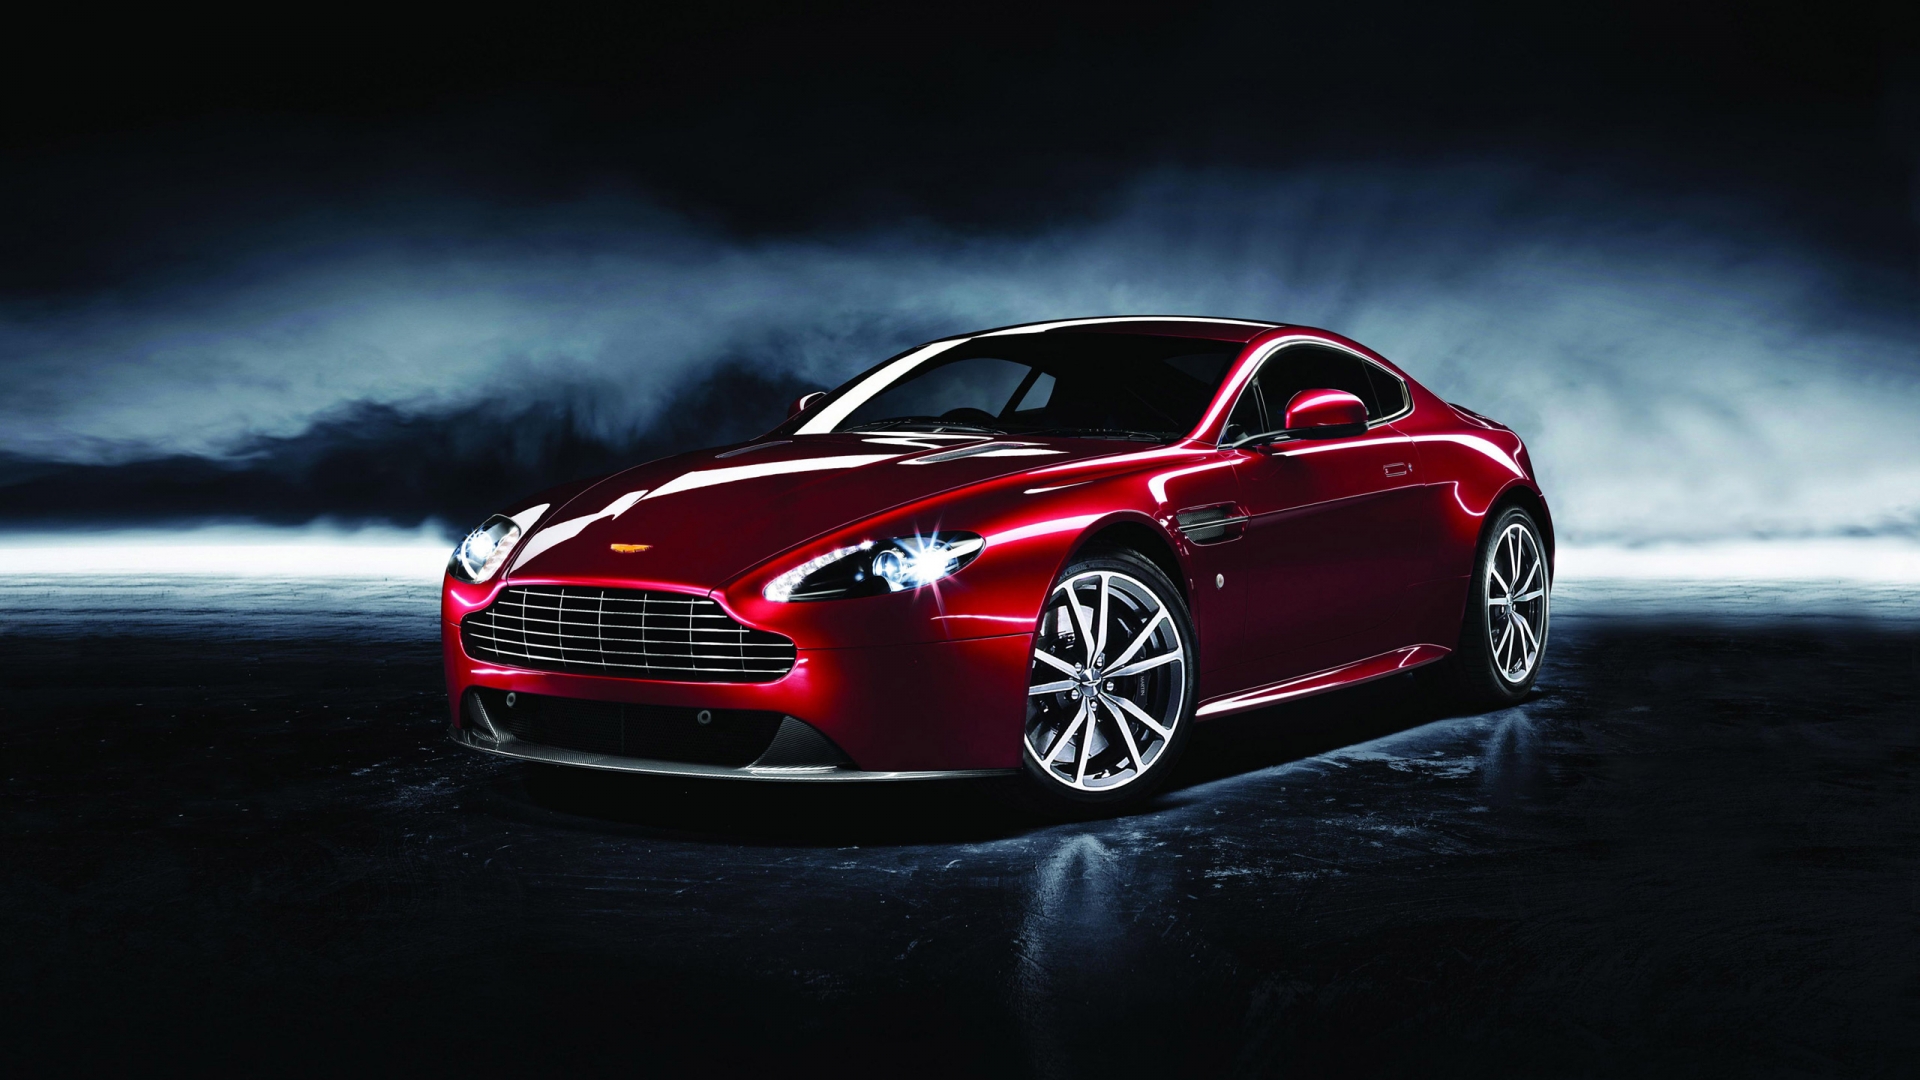 2013 Aston Martin -Wallpapers 1080p